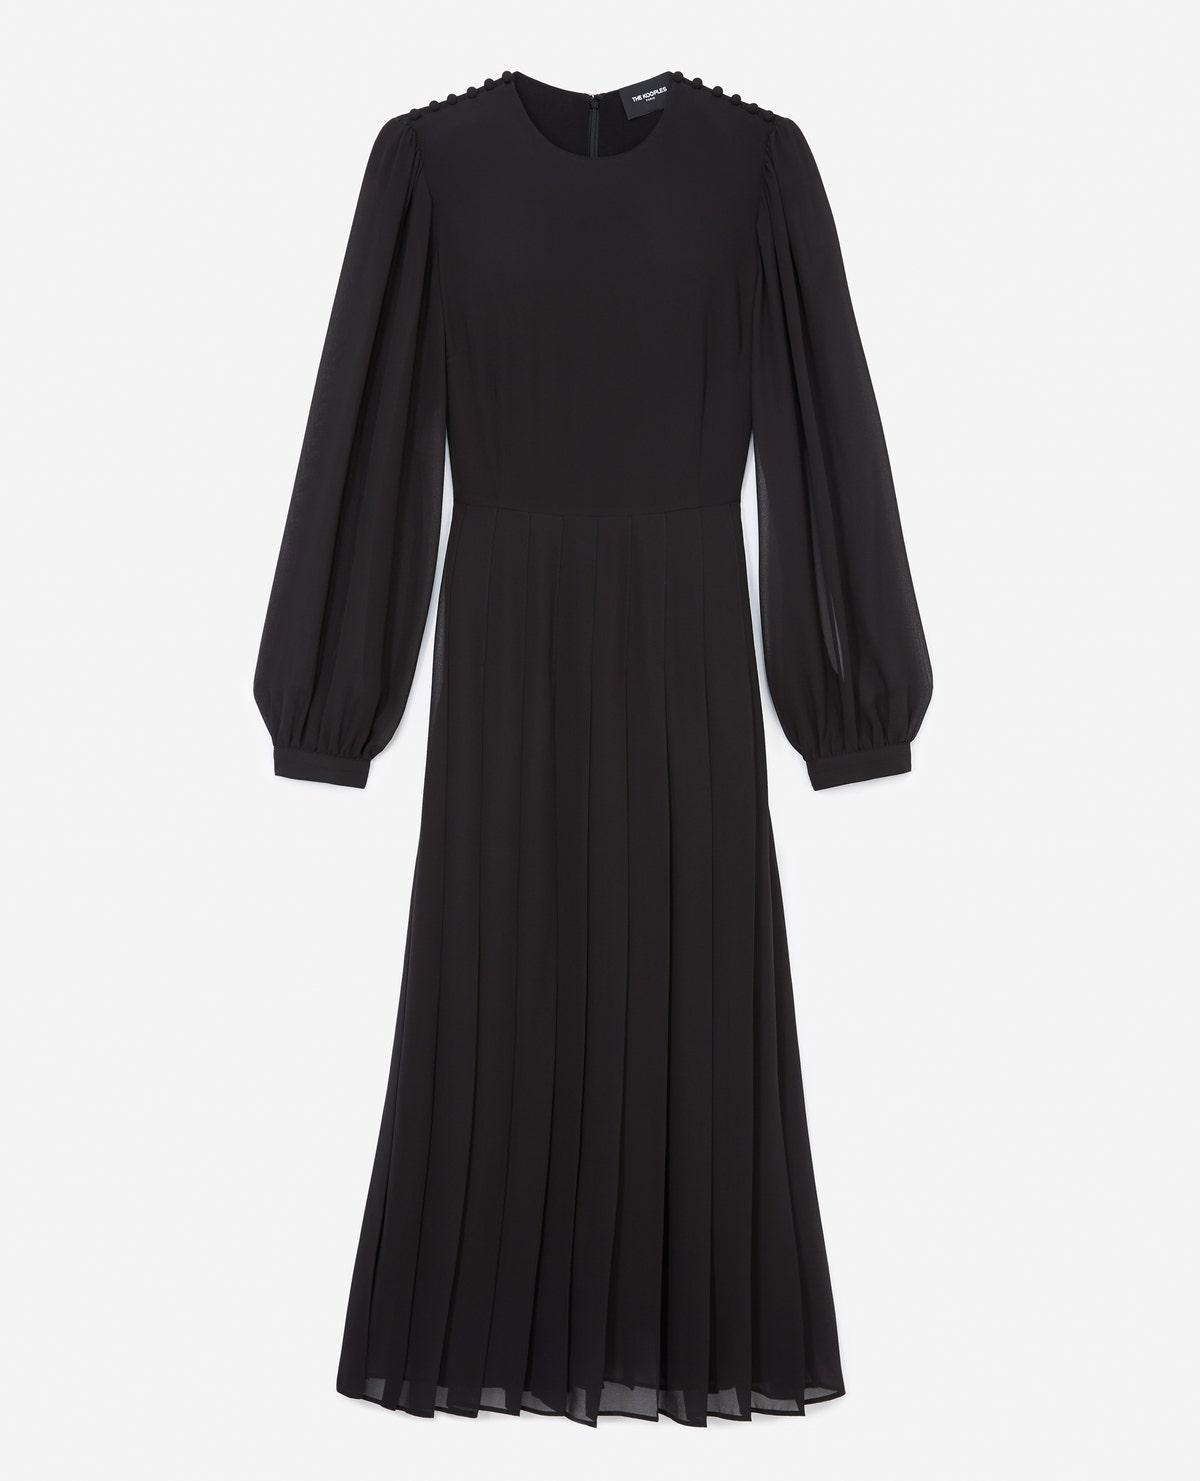 La robe longue noire The Kooples